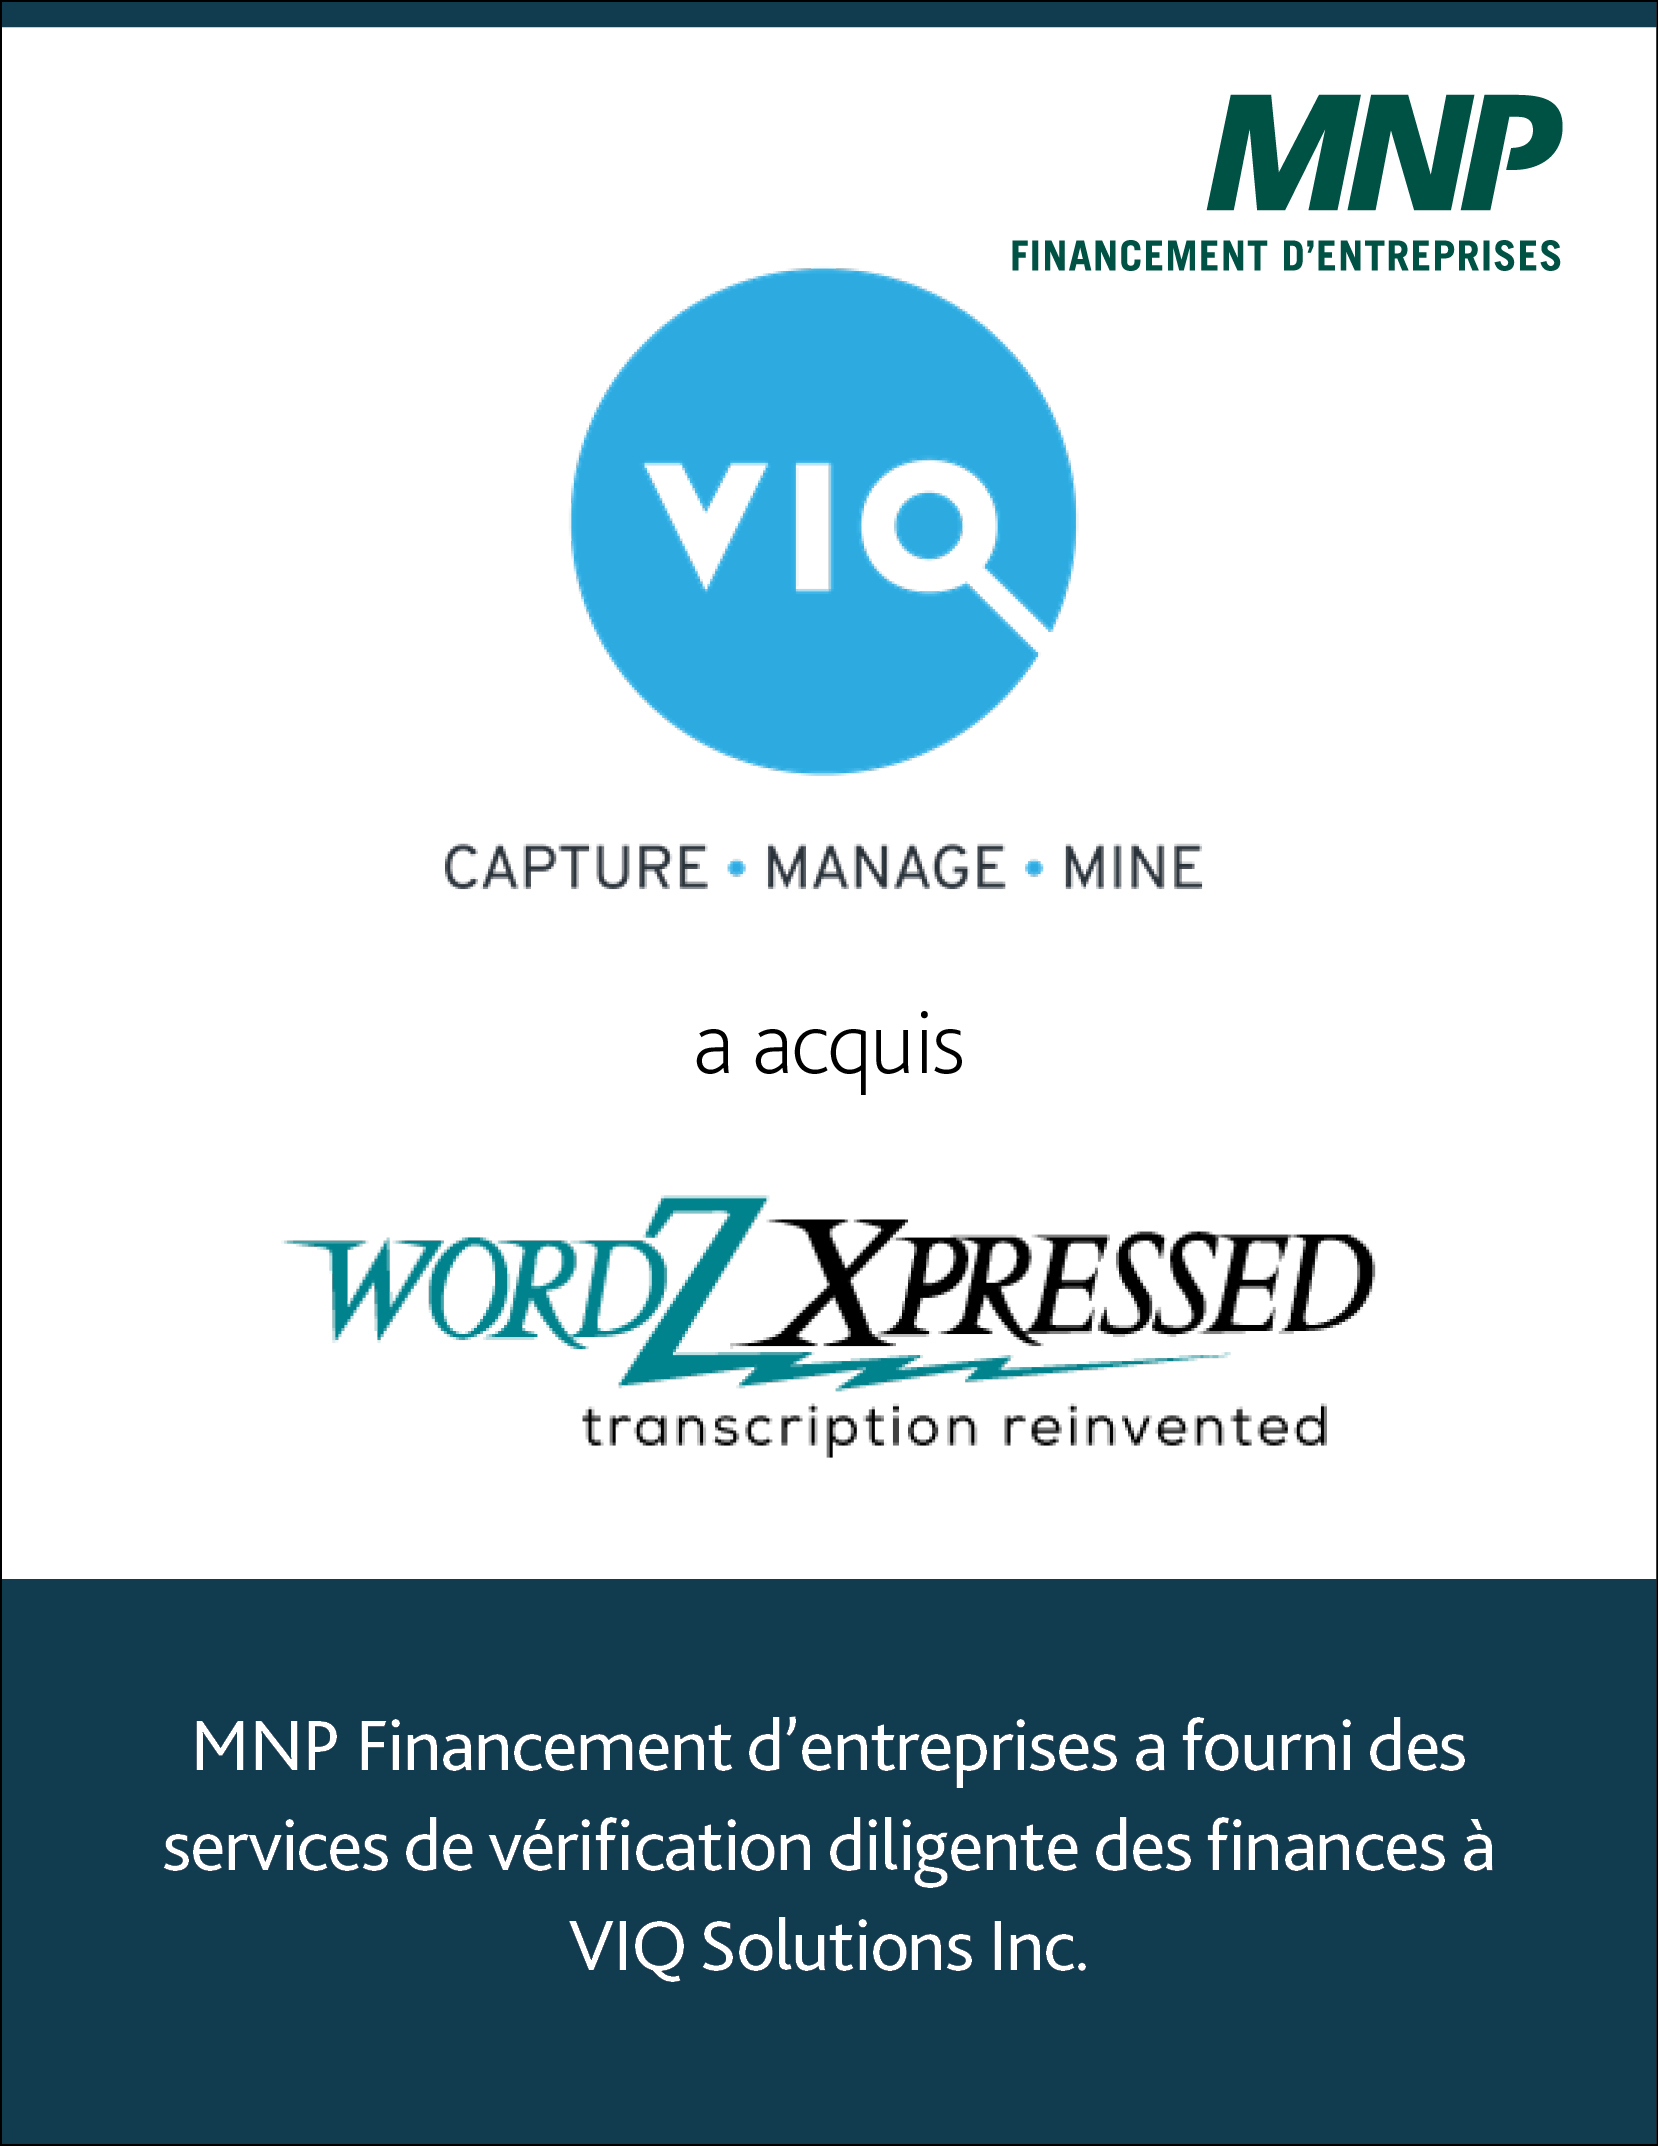 VIQ Solutions Inc. a acquis wordZXpressed, Inc.